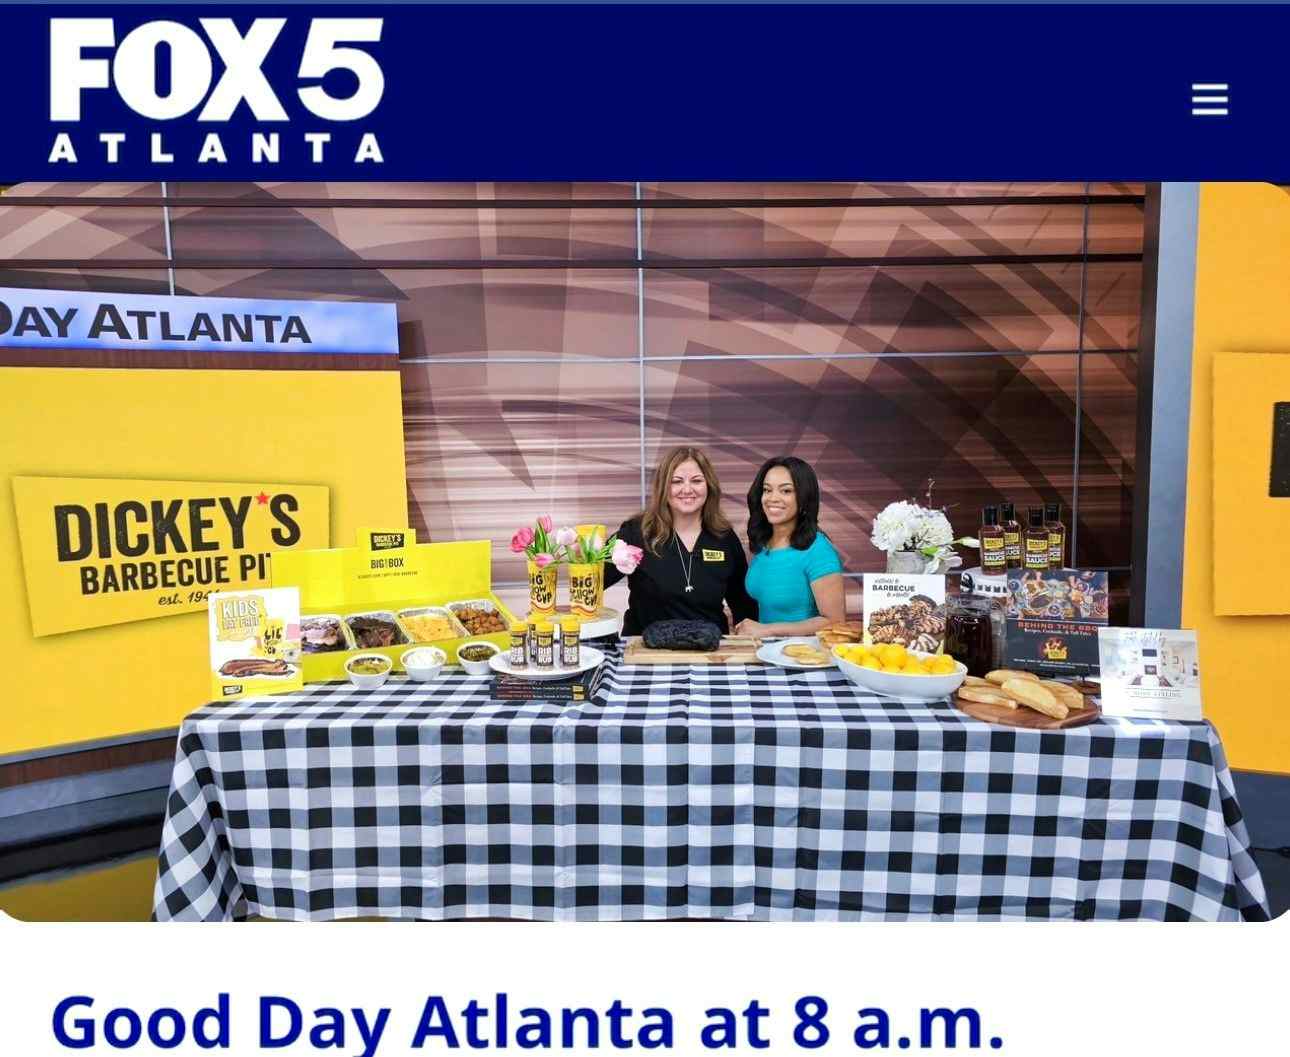 Dickey's Barbecue Pit CEO, Laura Rea Dickey, Joins FOX5's Good Day Atlanta 